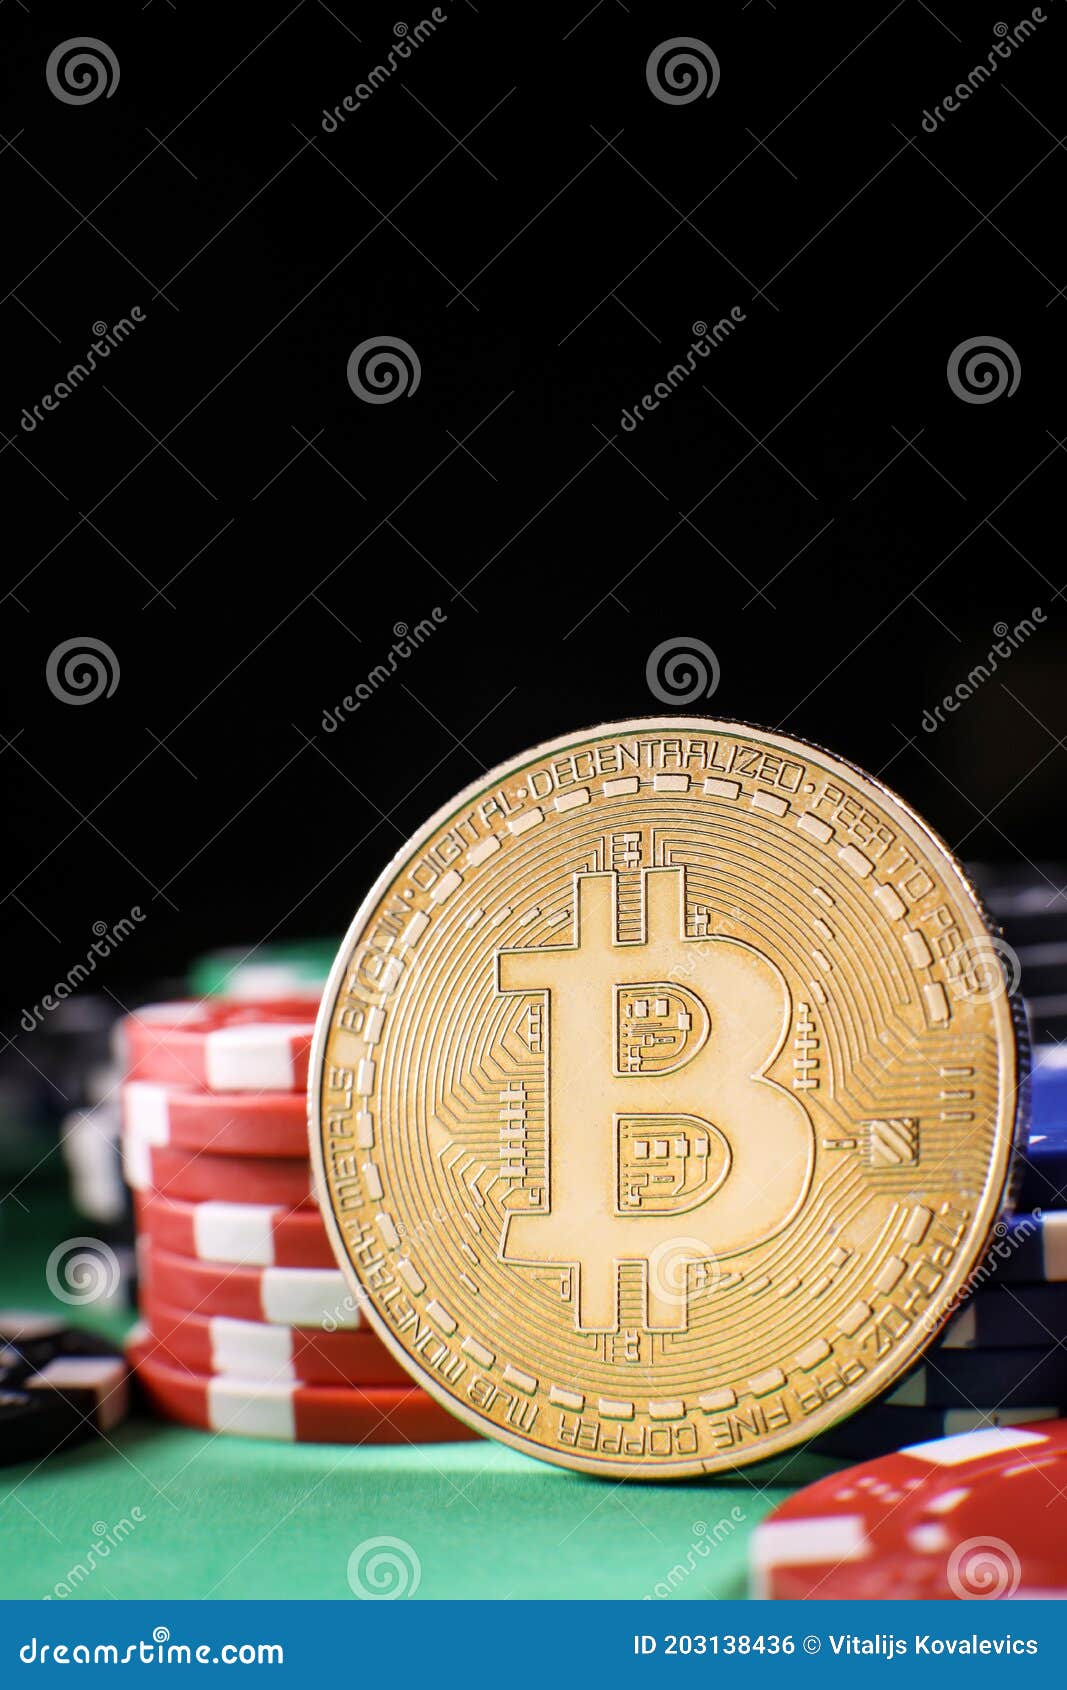 10 Trendy Ways To Improve On bitcoin casino sites